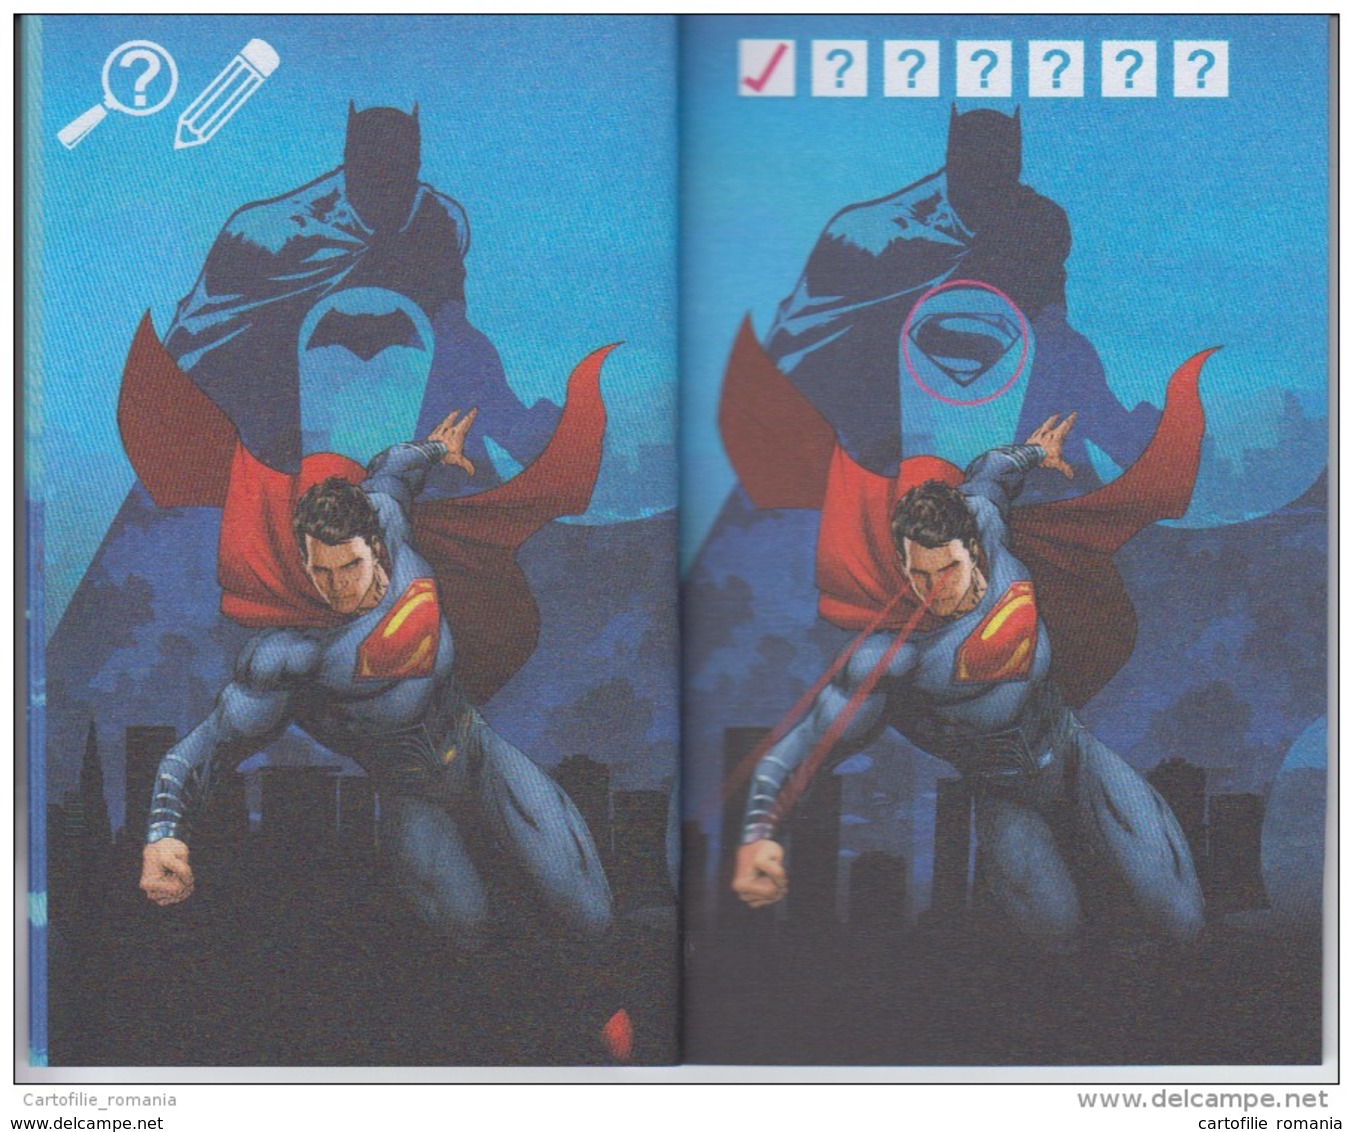 DC comics -  USA - Superman - Joe Schuster - Colouring book - Nestle edition - 2016 Warner Bros. - Book, comics, BD